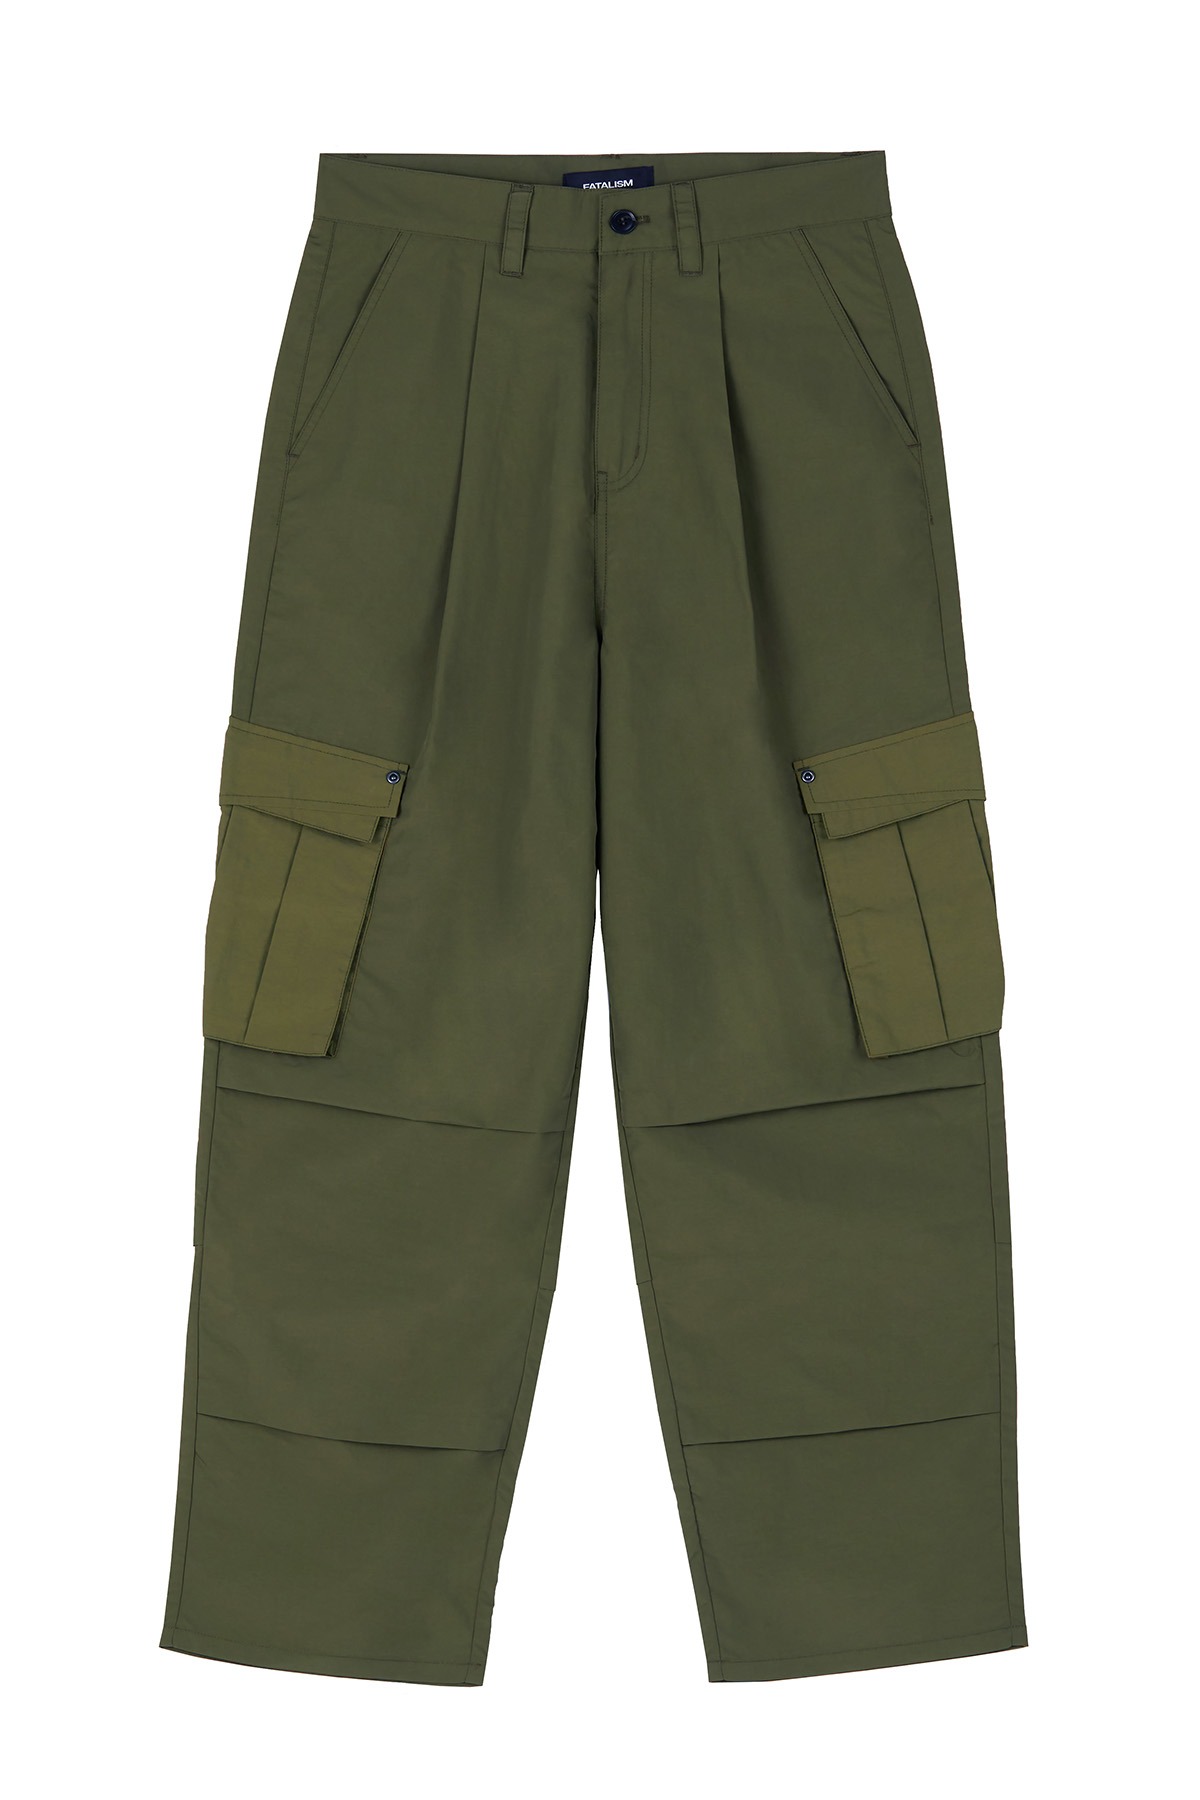 #0350 Military cargo pants khaki